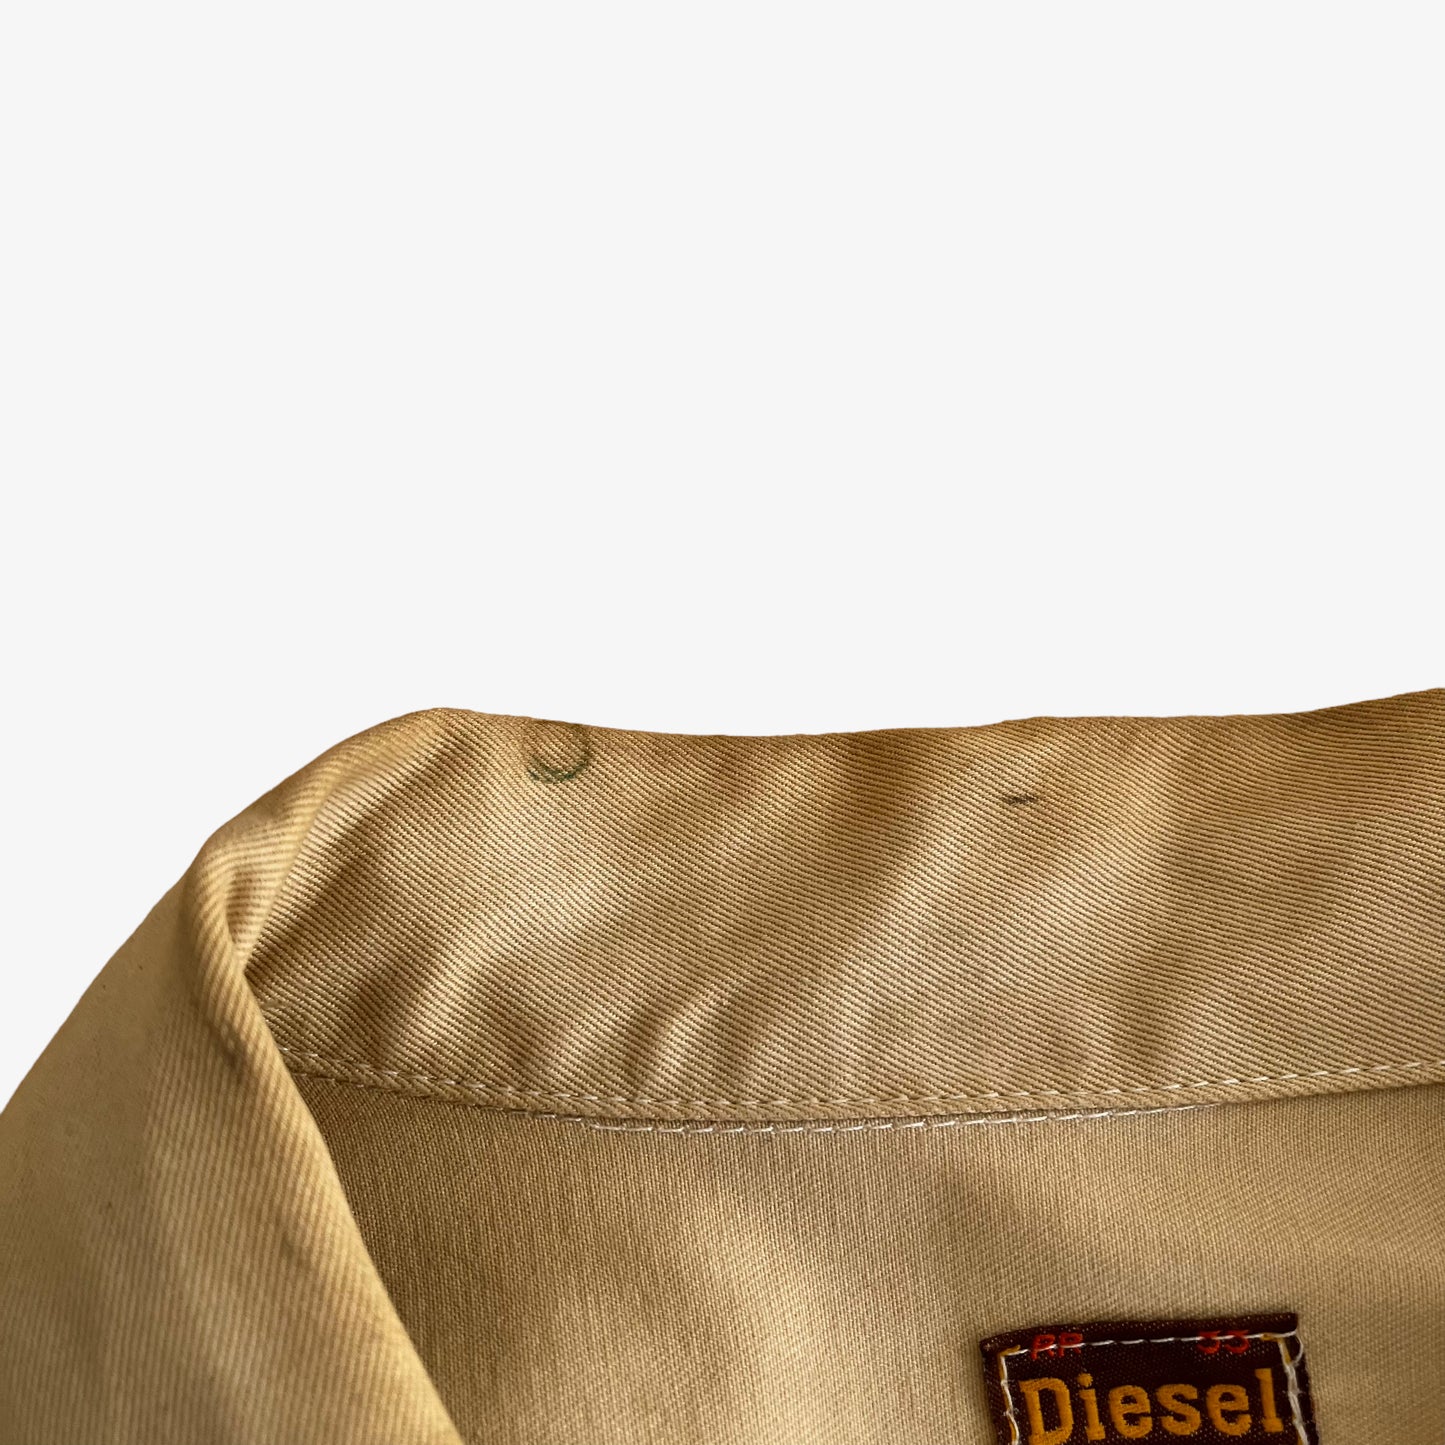 Vintage 80s Diesel Industry Union Basic Apparel Trucker Jacket Collar - Casspios Dream